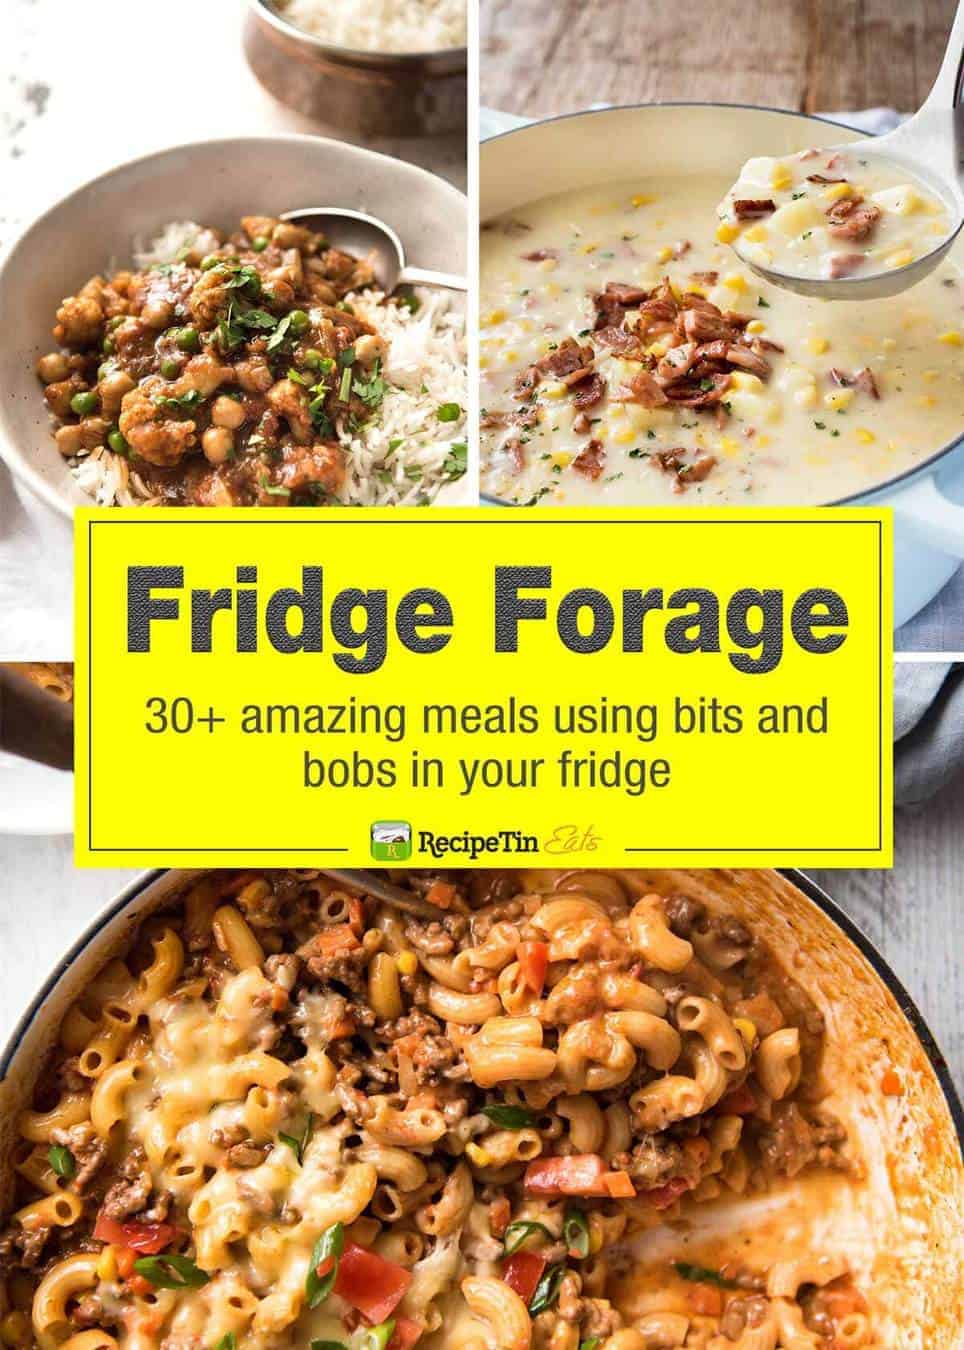 Fridge-forage-1